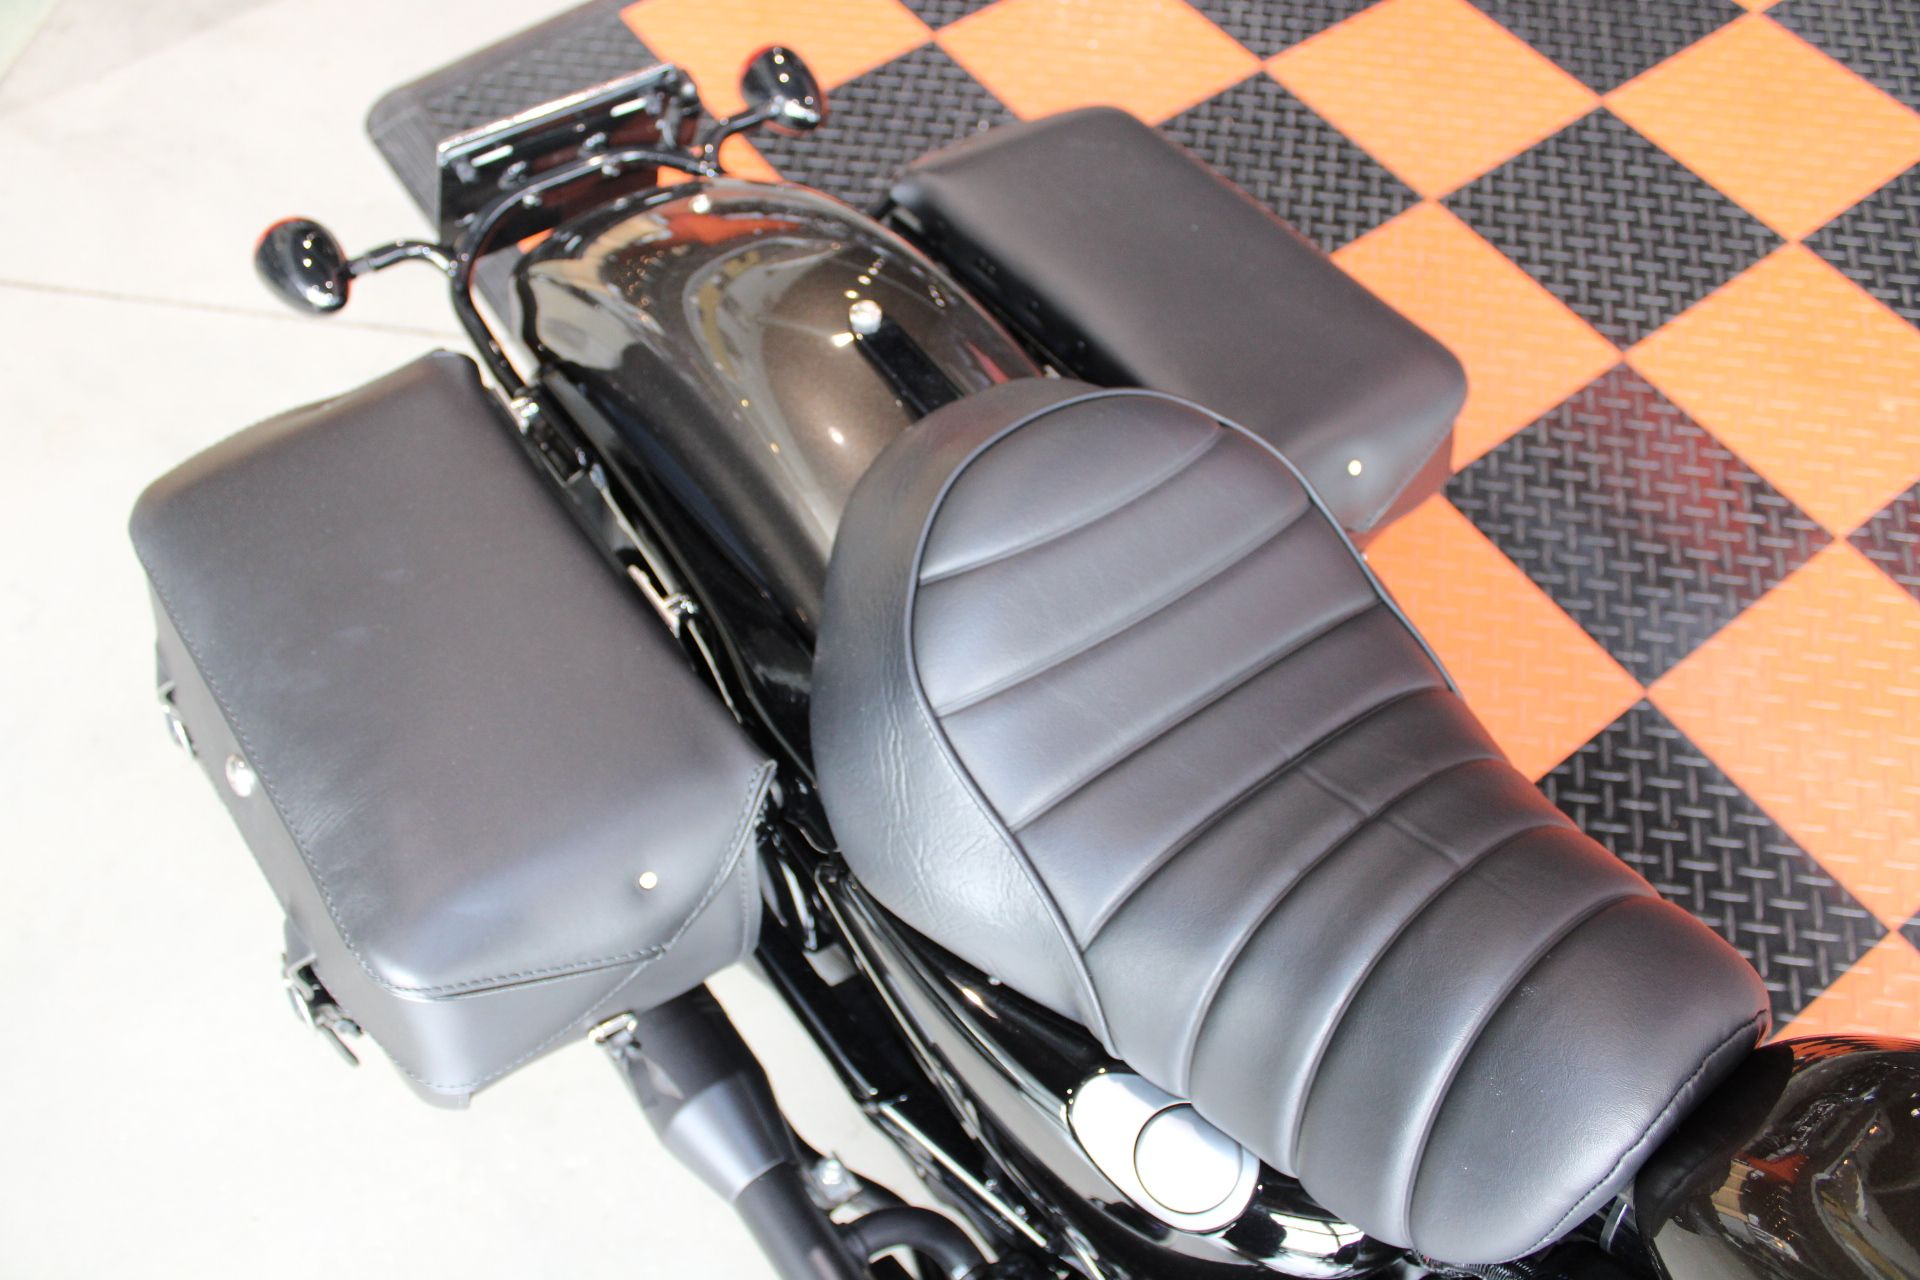 2020 Harley-Davidson Iron 883™ in Shorewood, Illinois - Photo 7